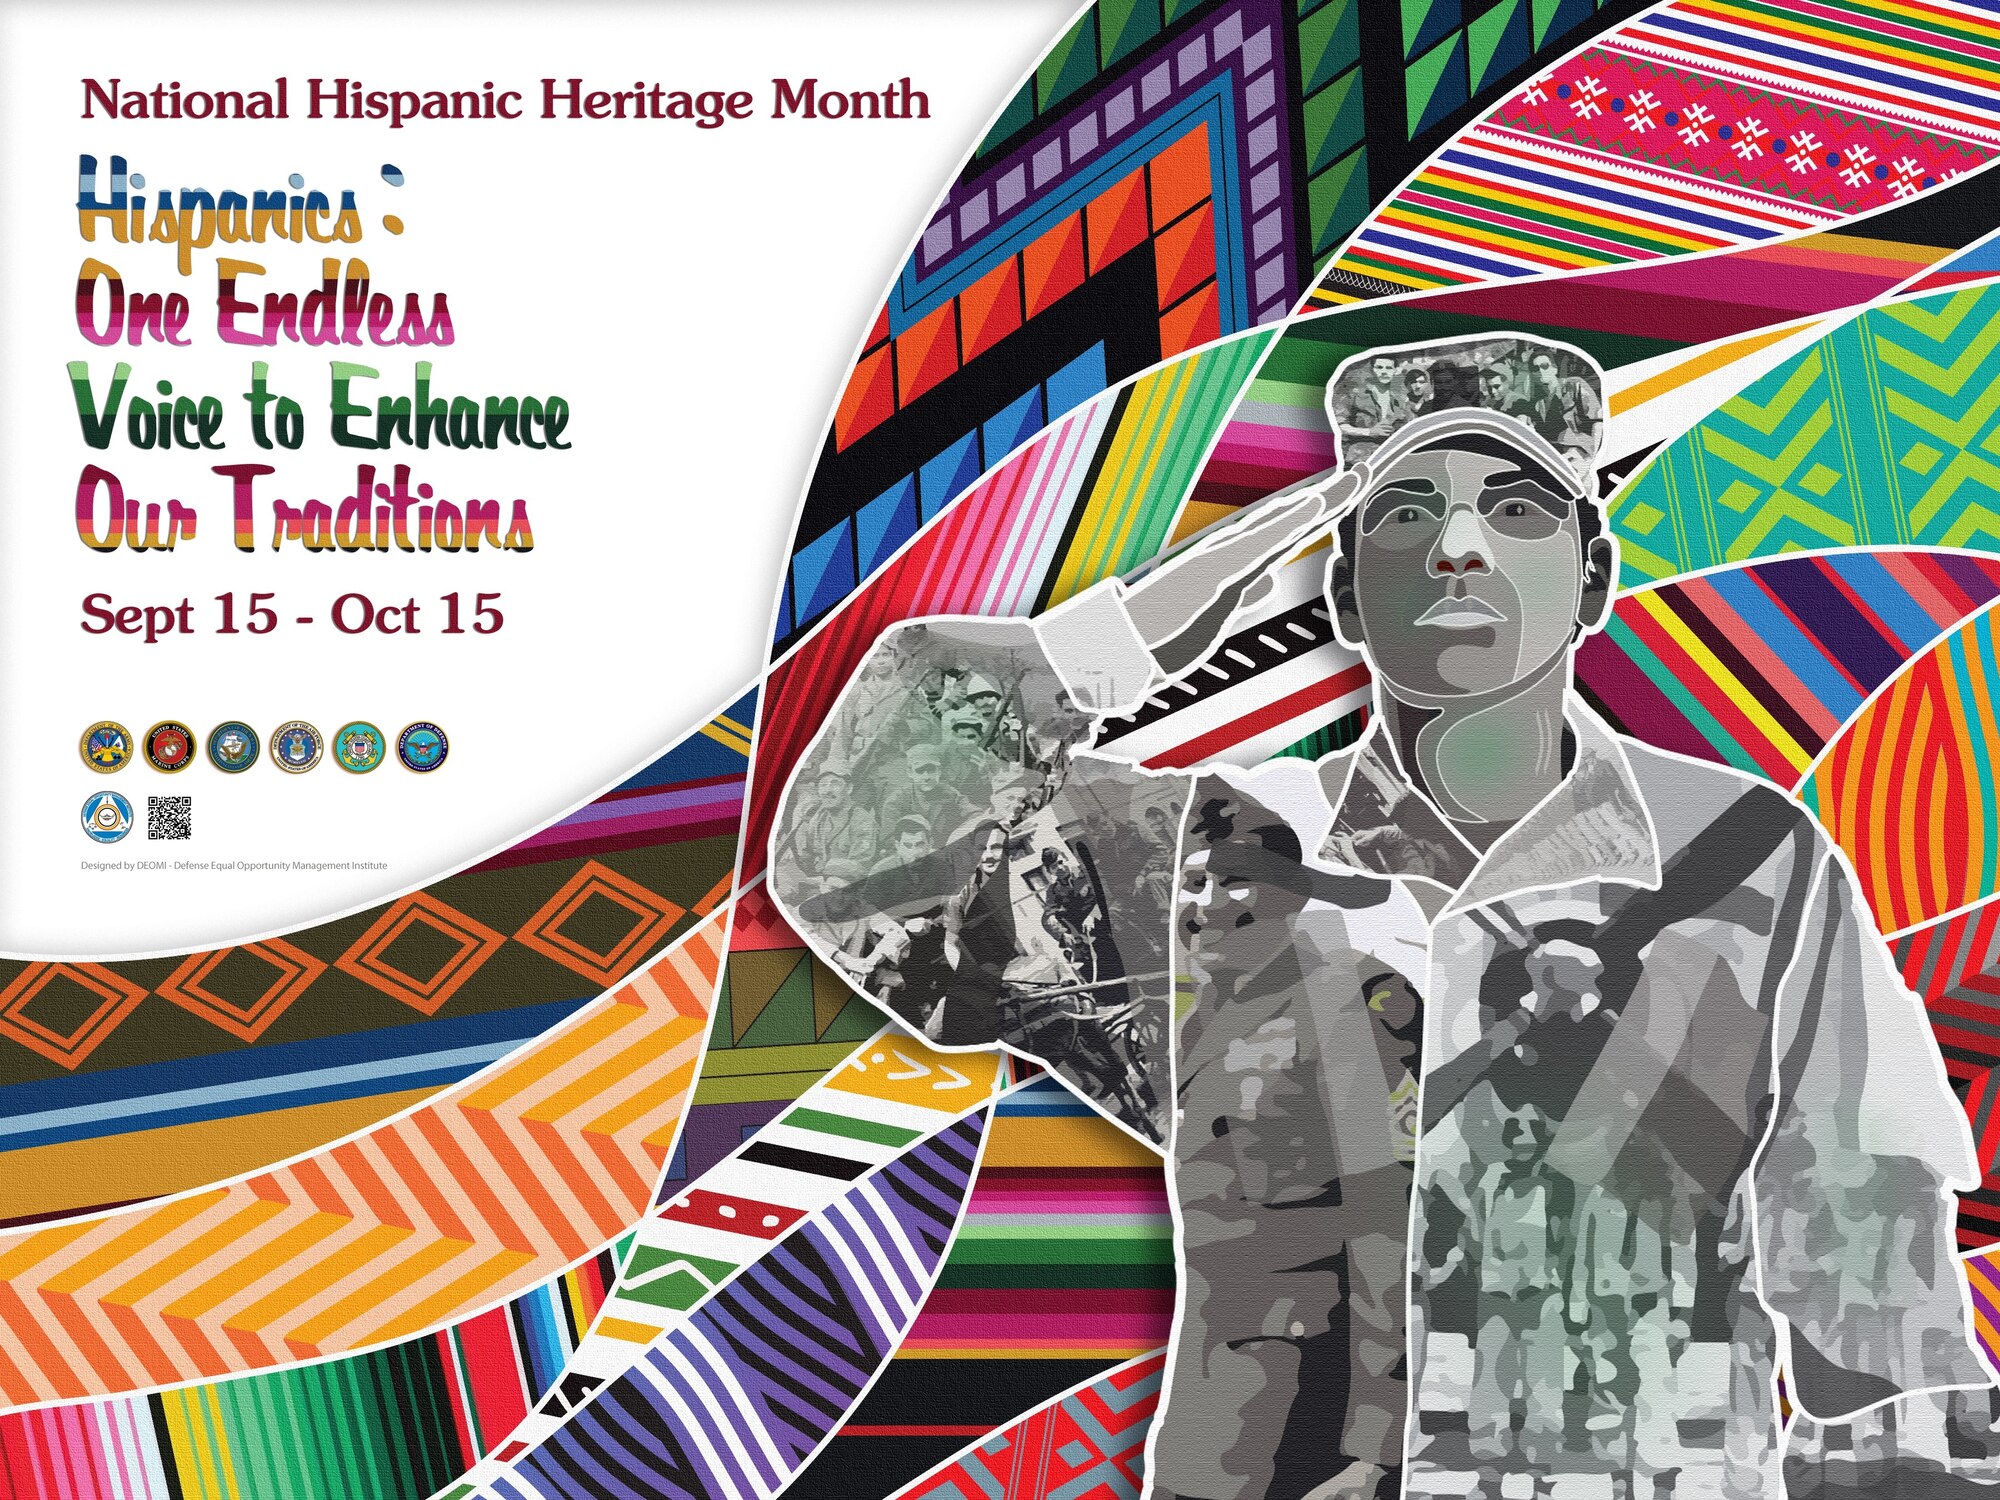 September 15- October 15 is Hispanic Heritage Month